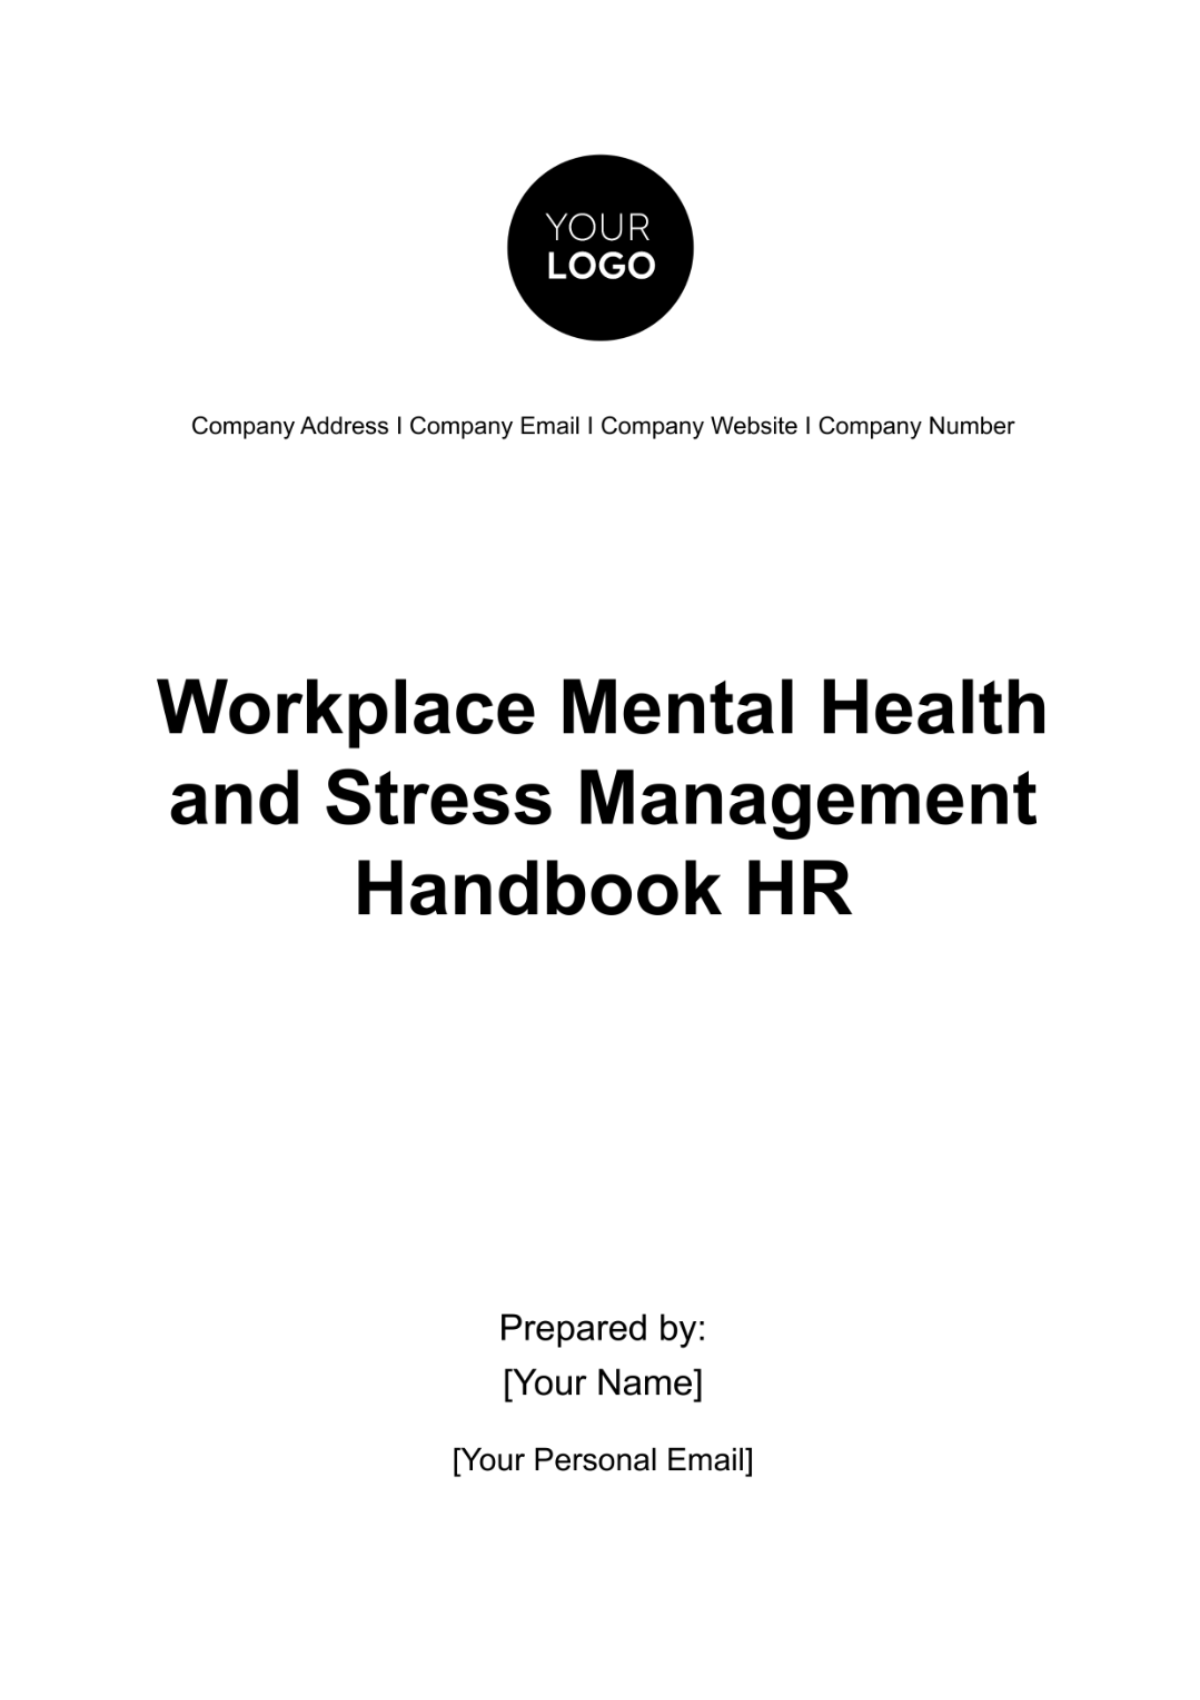 Workplace Mental Health and Stress Management Handbook HR Template